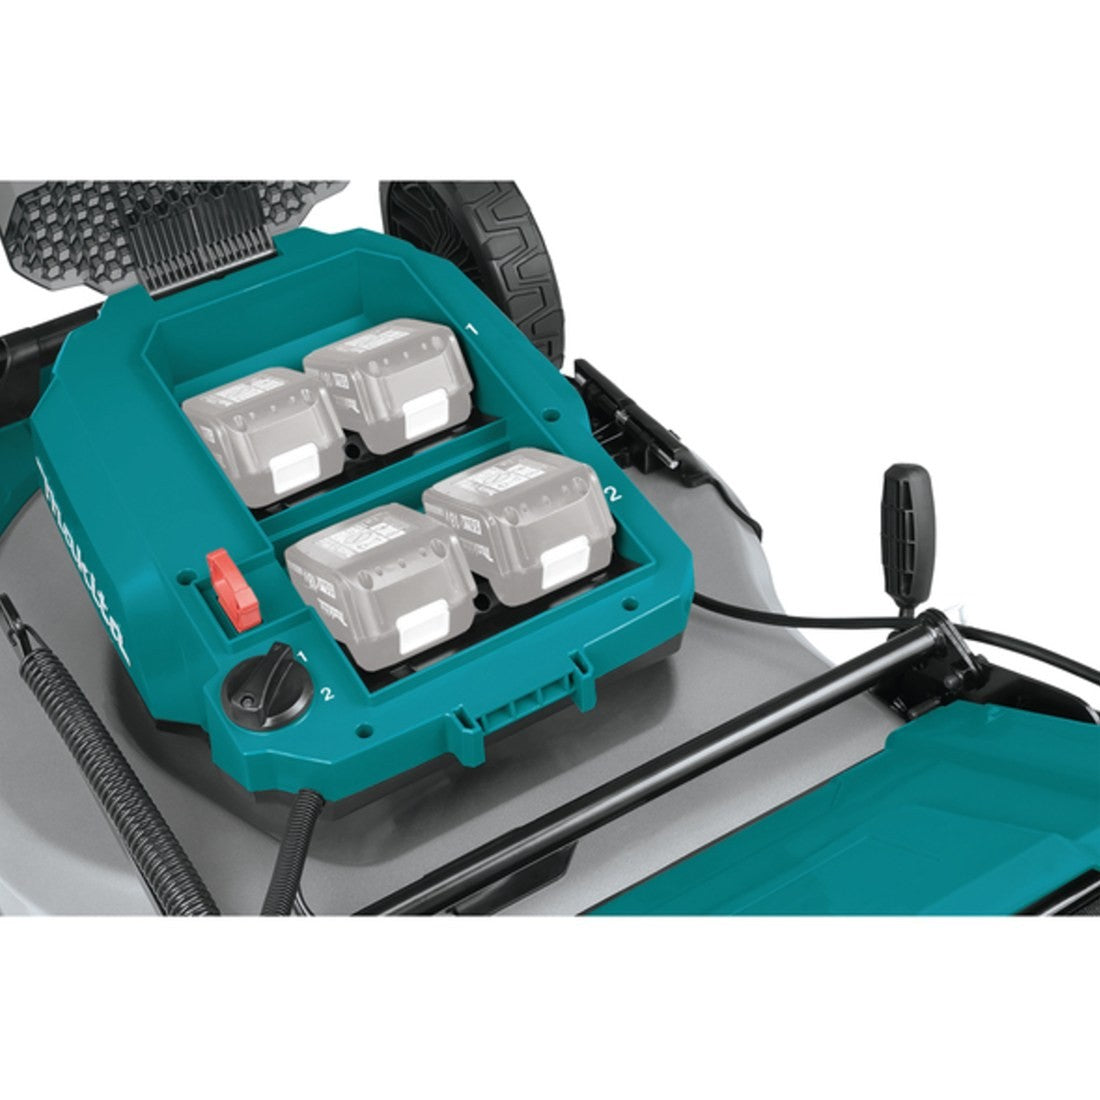 Makita DLM530Z Cordless Brushless Lawn Mower 530mm (21″) 18V x2 (36V) LXT® Li-Ion (Bare Tool)